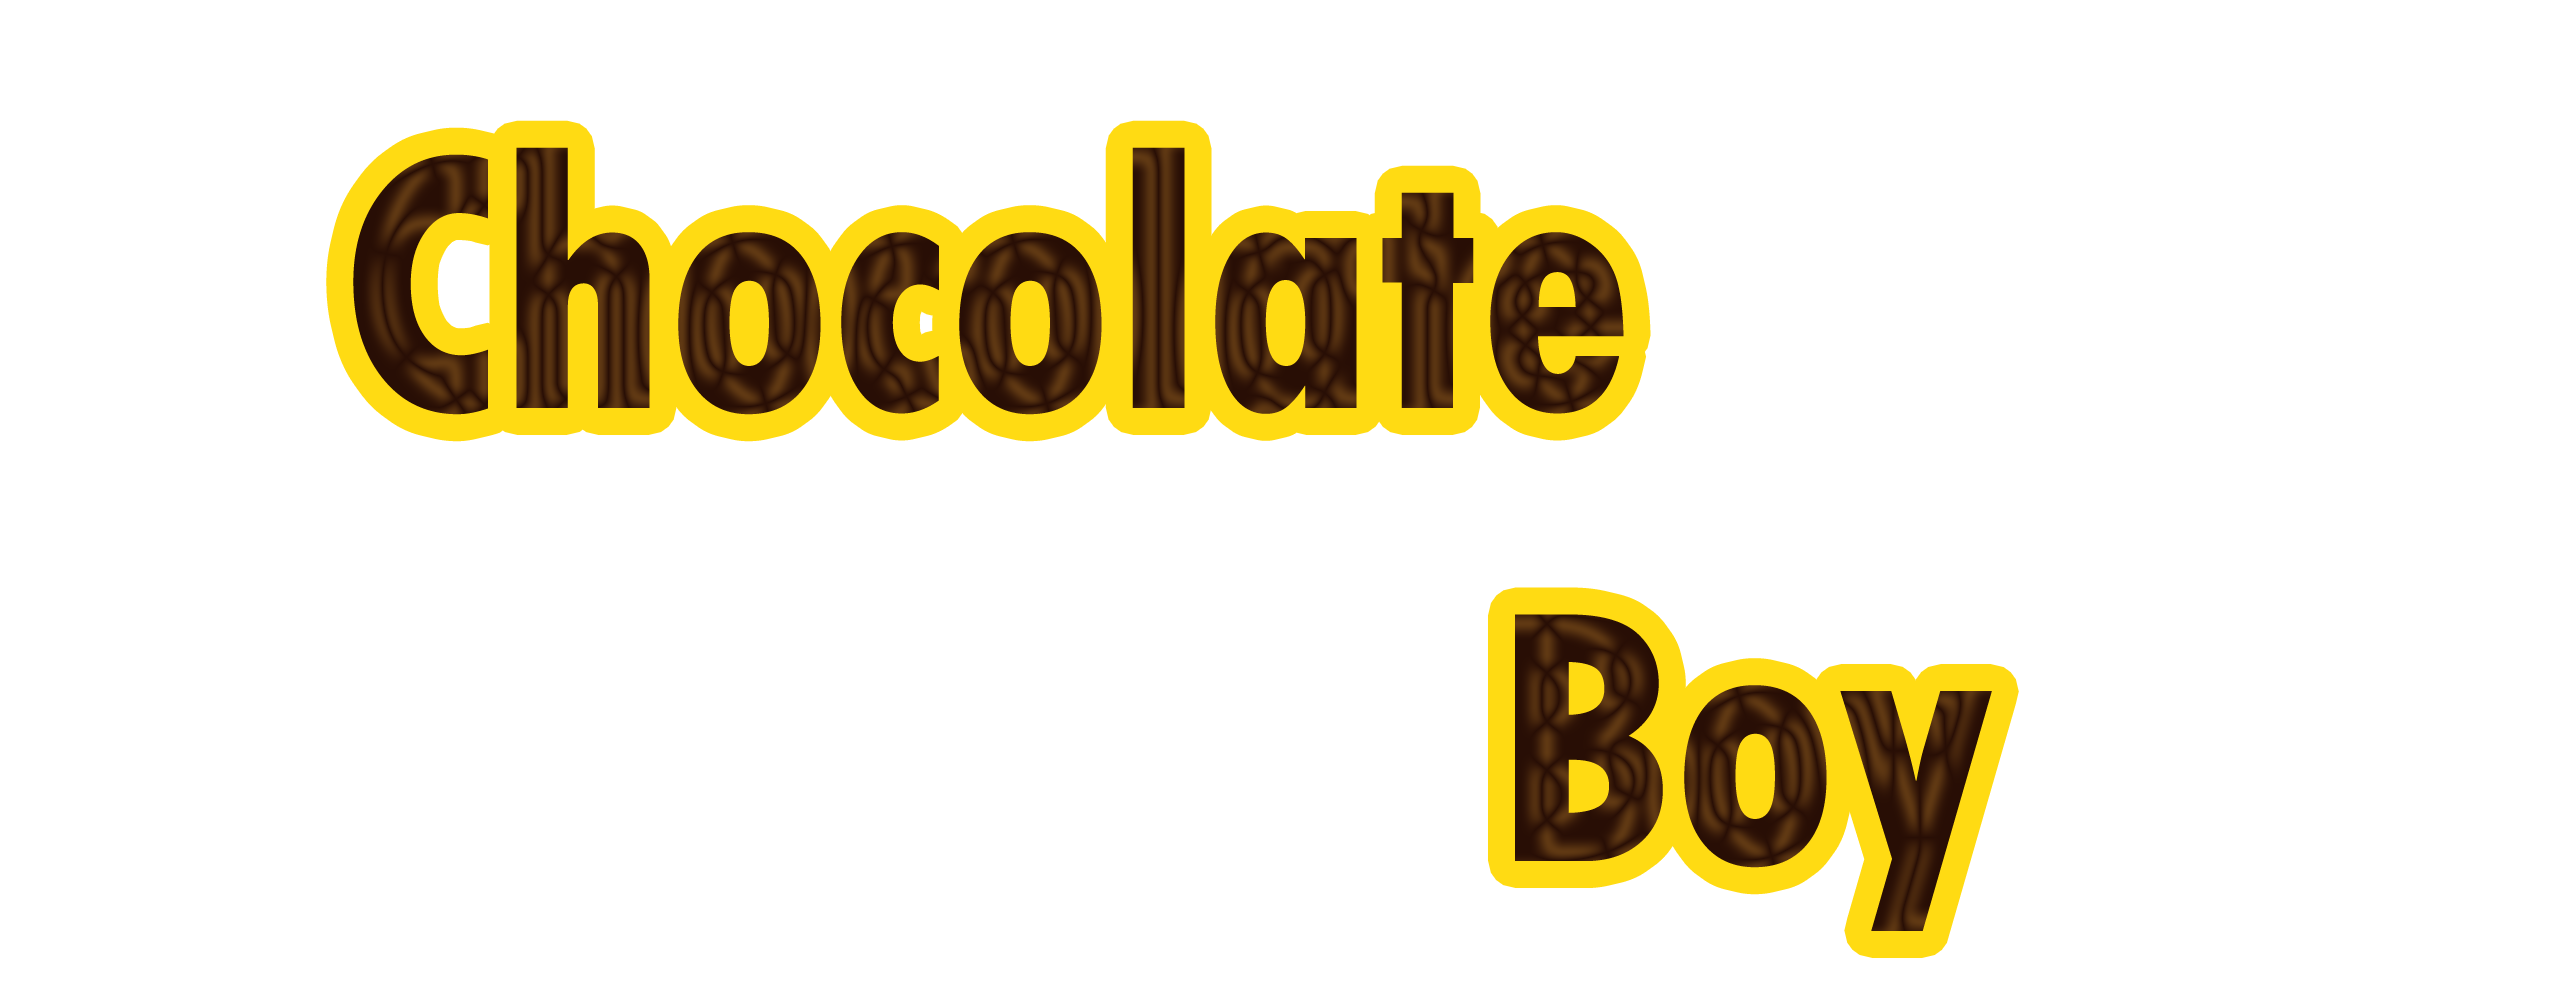 Chocolate Boy #1